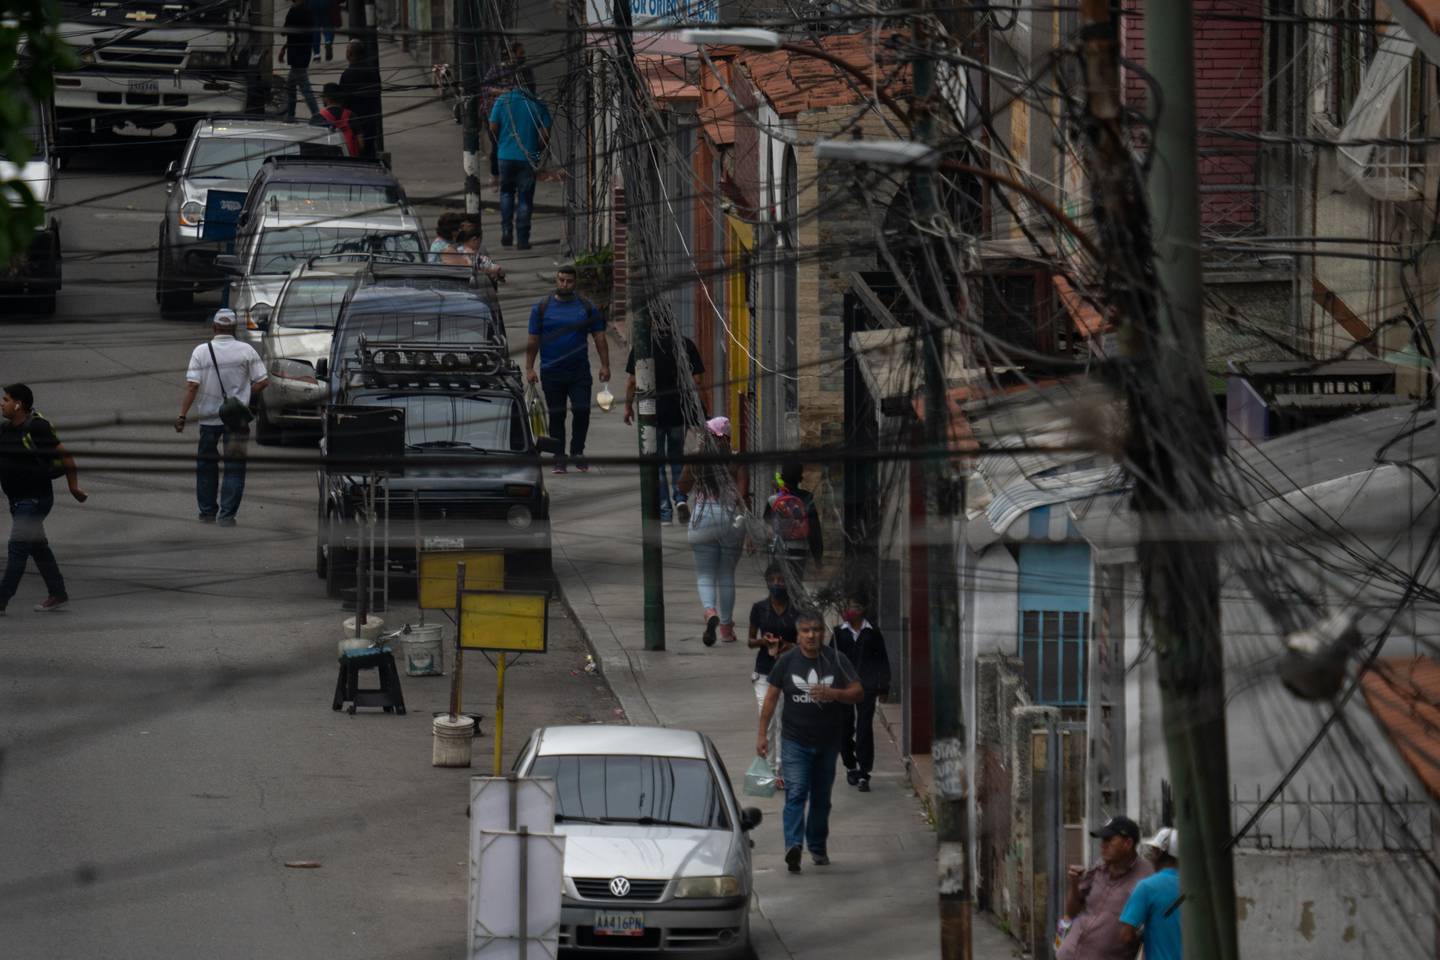 Catía, a low-income neighborhood in the Venezuelan capital Caracas. Source: Bloomberg